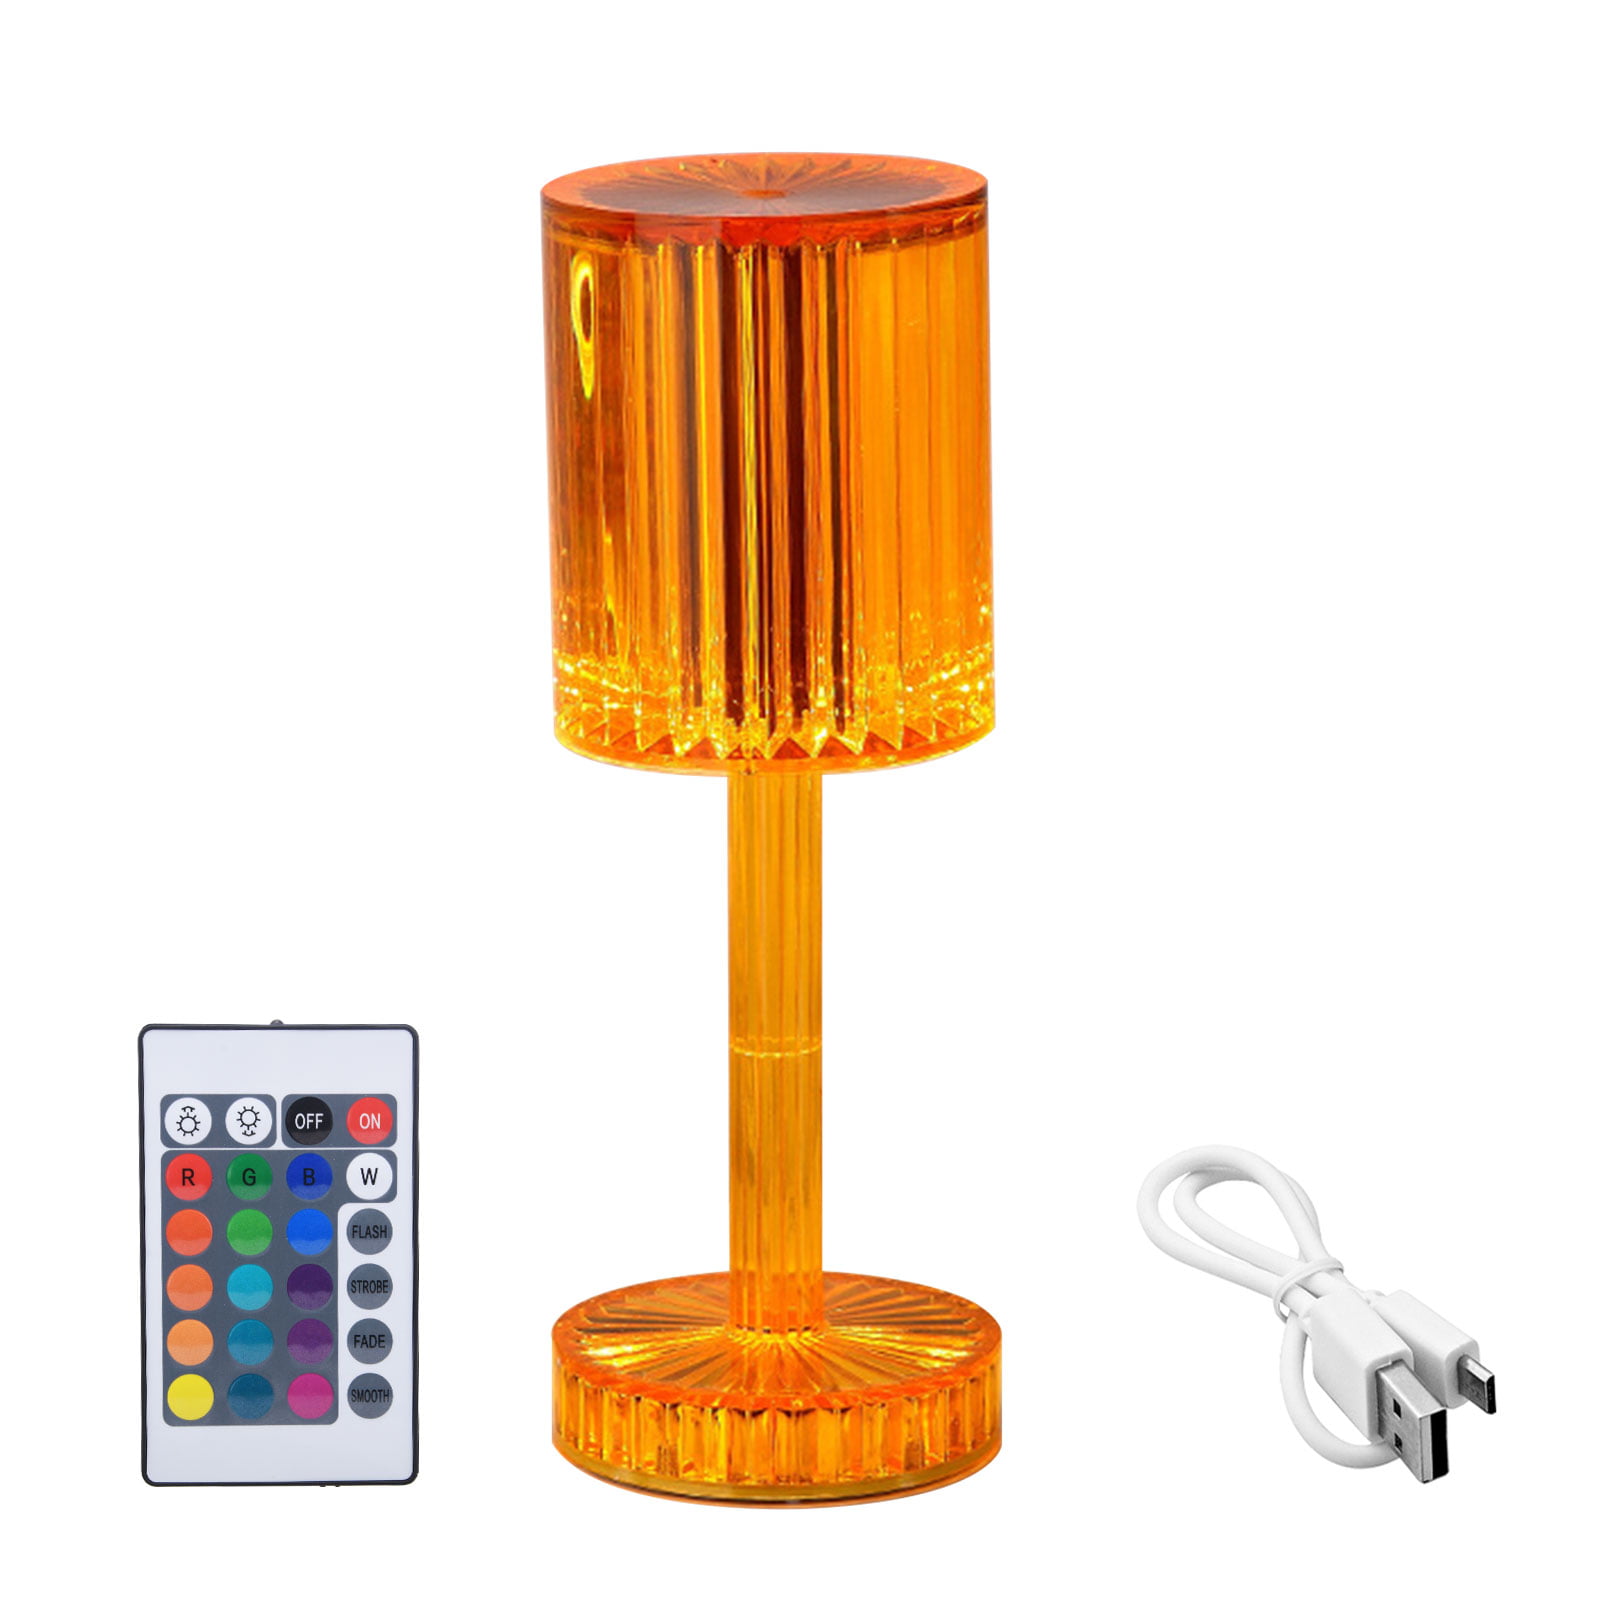 HOT LED Desk Lamp&USB Charging Night Lamp Alarm Clock Table Lamp Study Read BY 